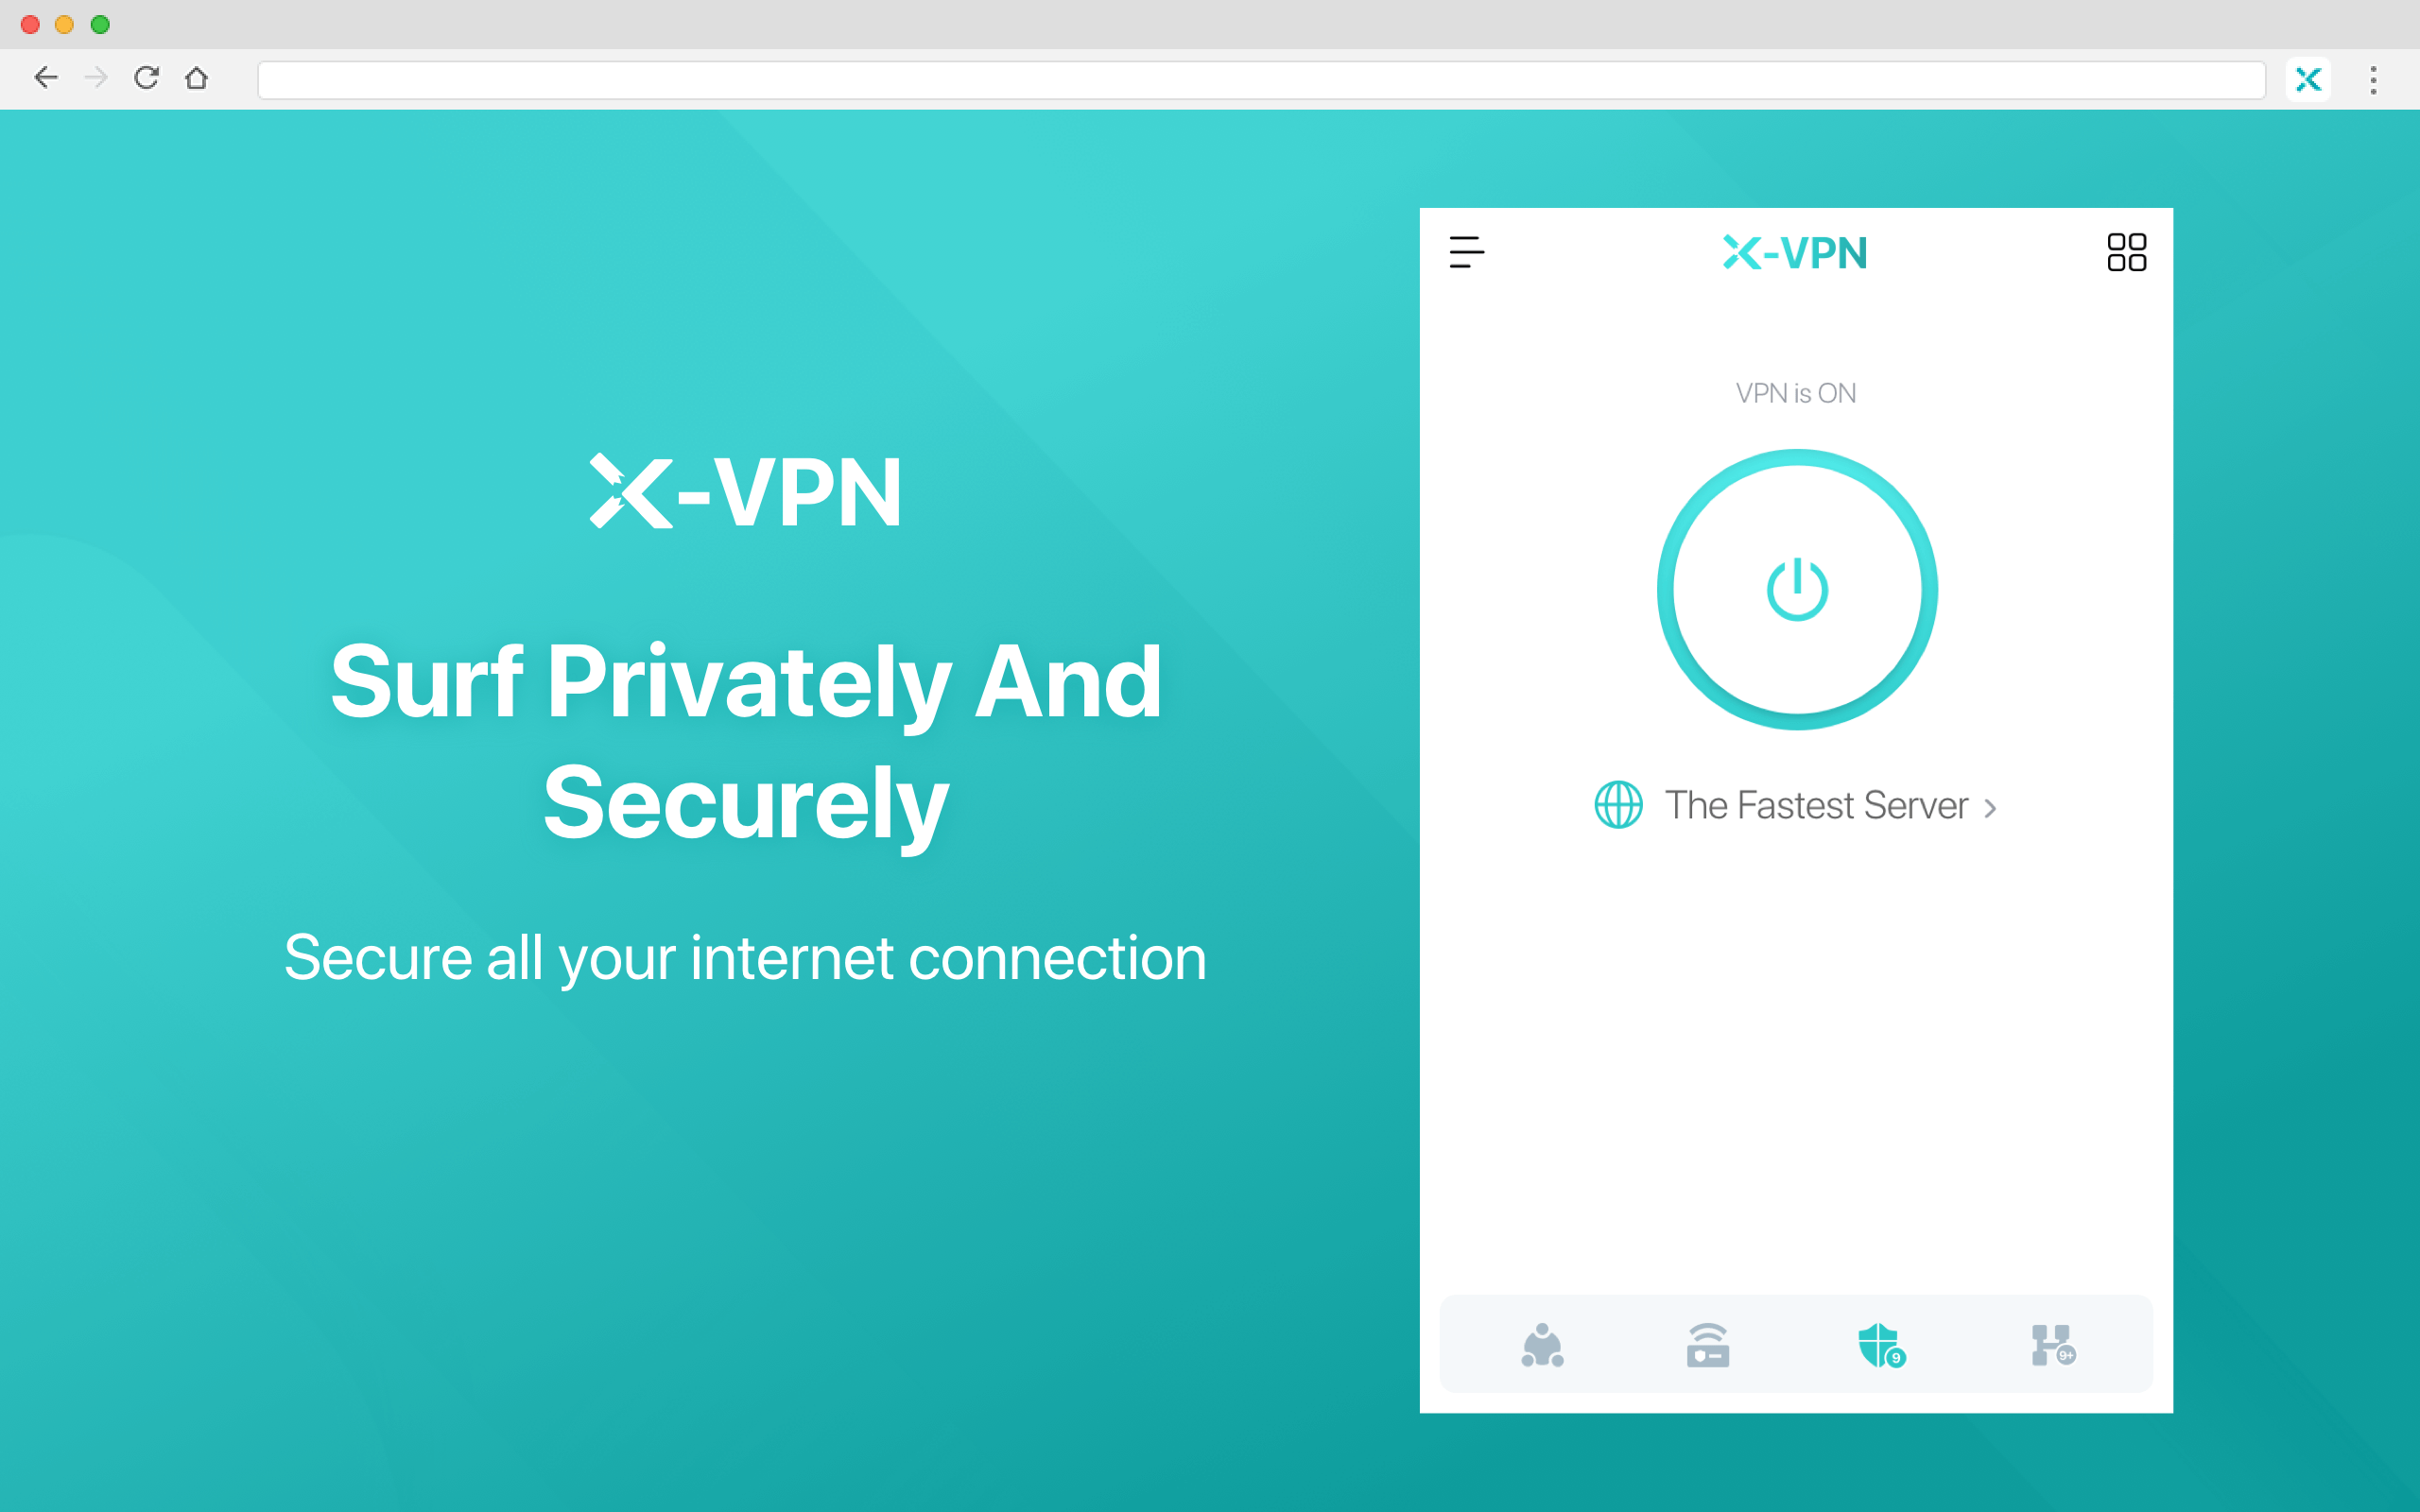 X-VPN Chrome extension